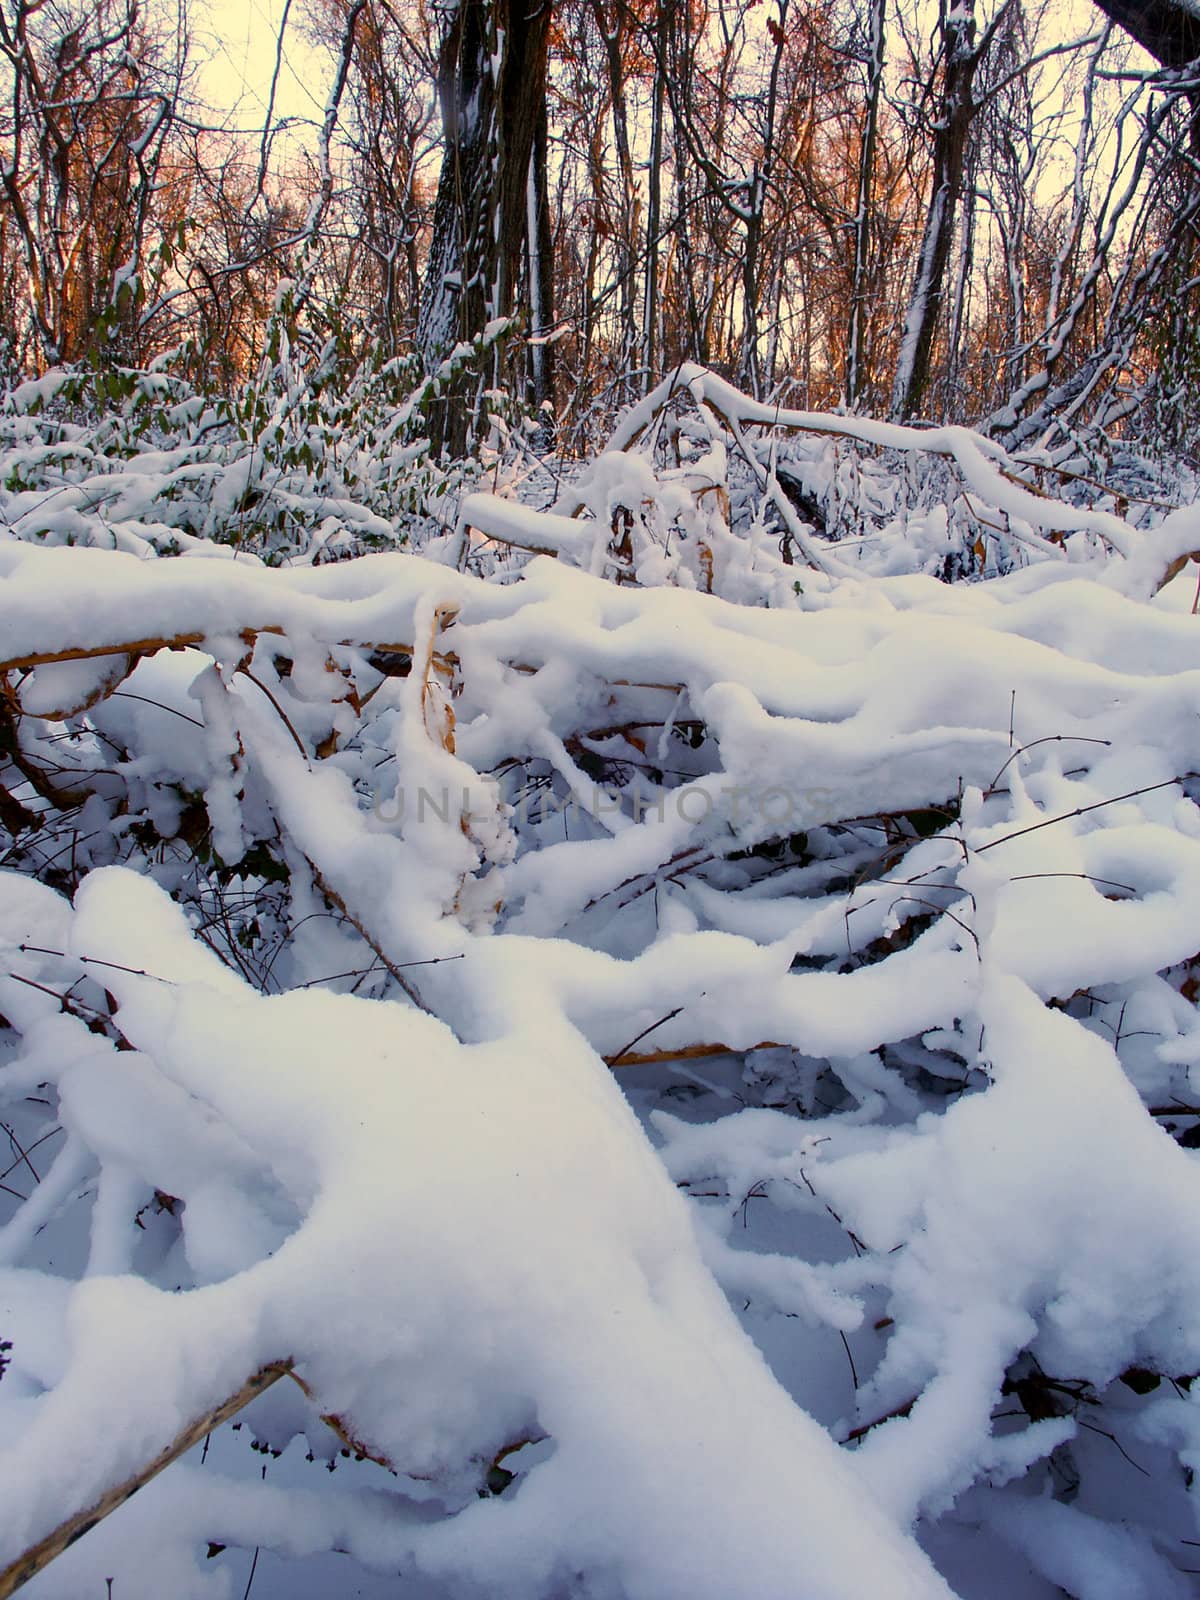 Allerton Park Winter Scenery by Wirepec